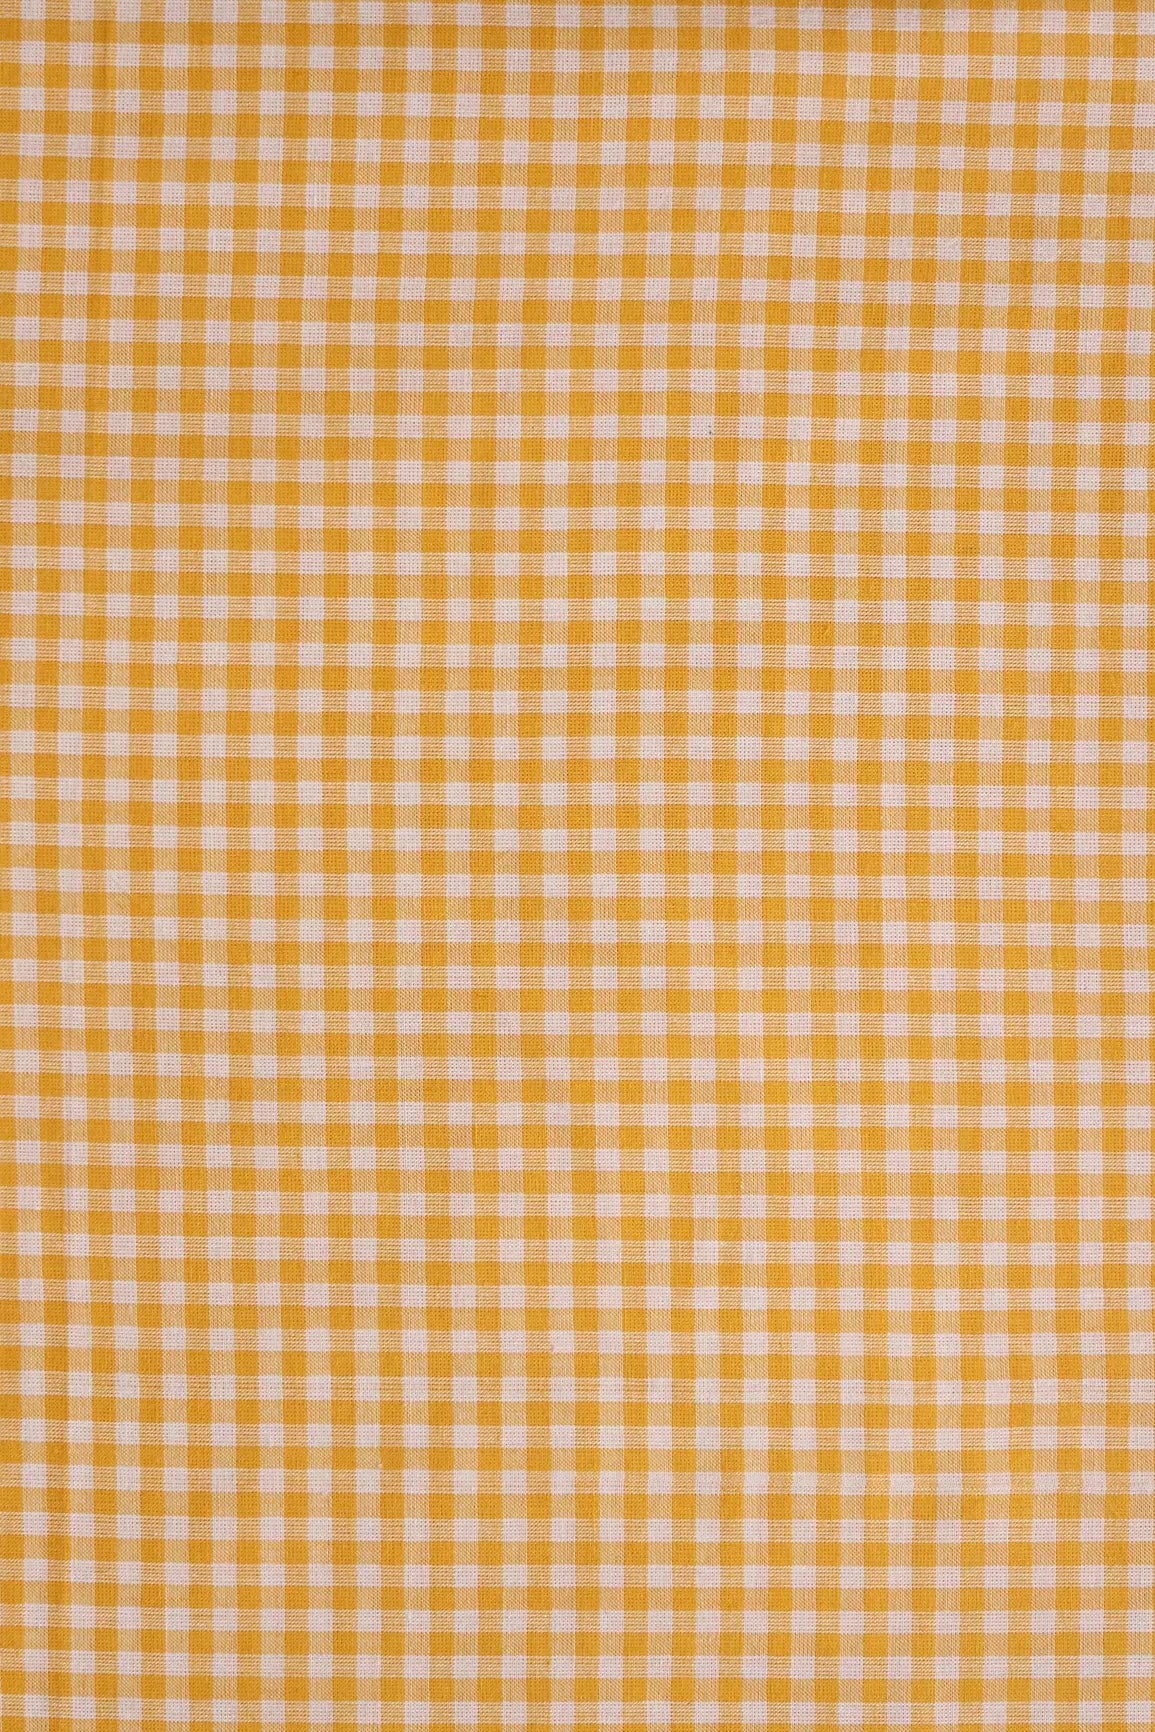 White And Yellow Small Checks Pattern On Handwoven Organic Cotton Fabric